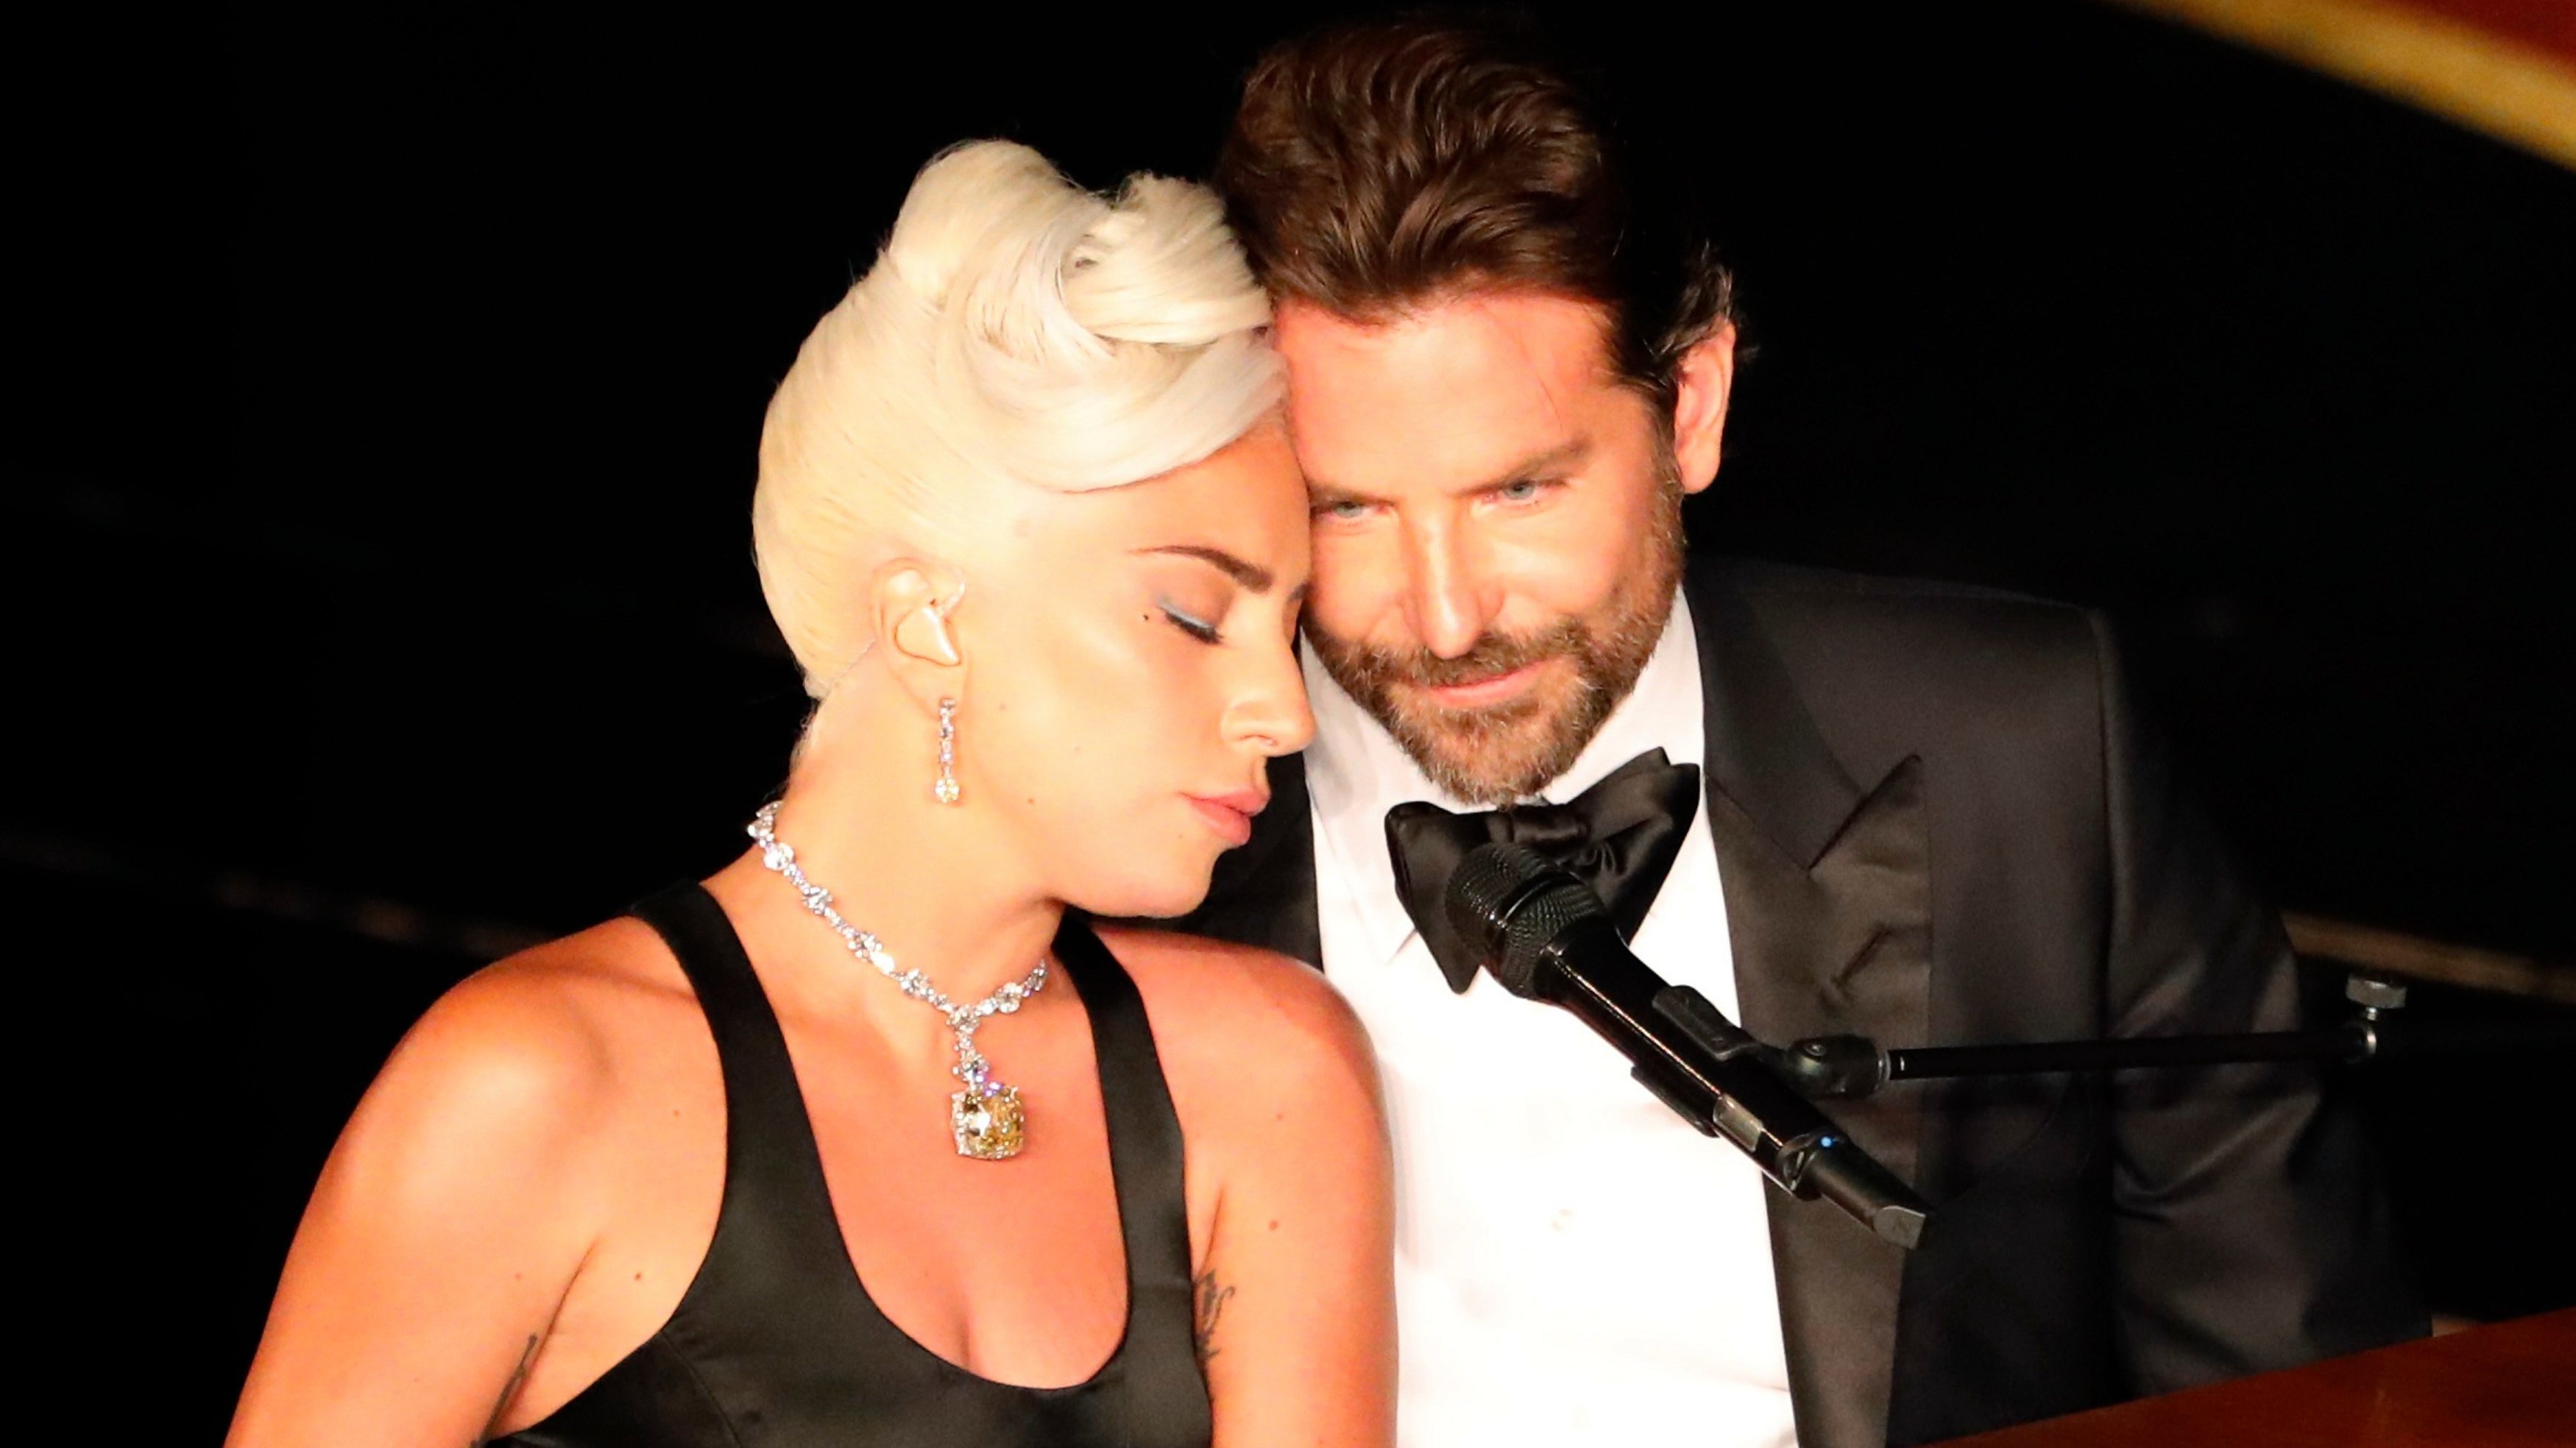 Lady Gaga and Bradley Cooper dating